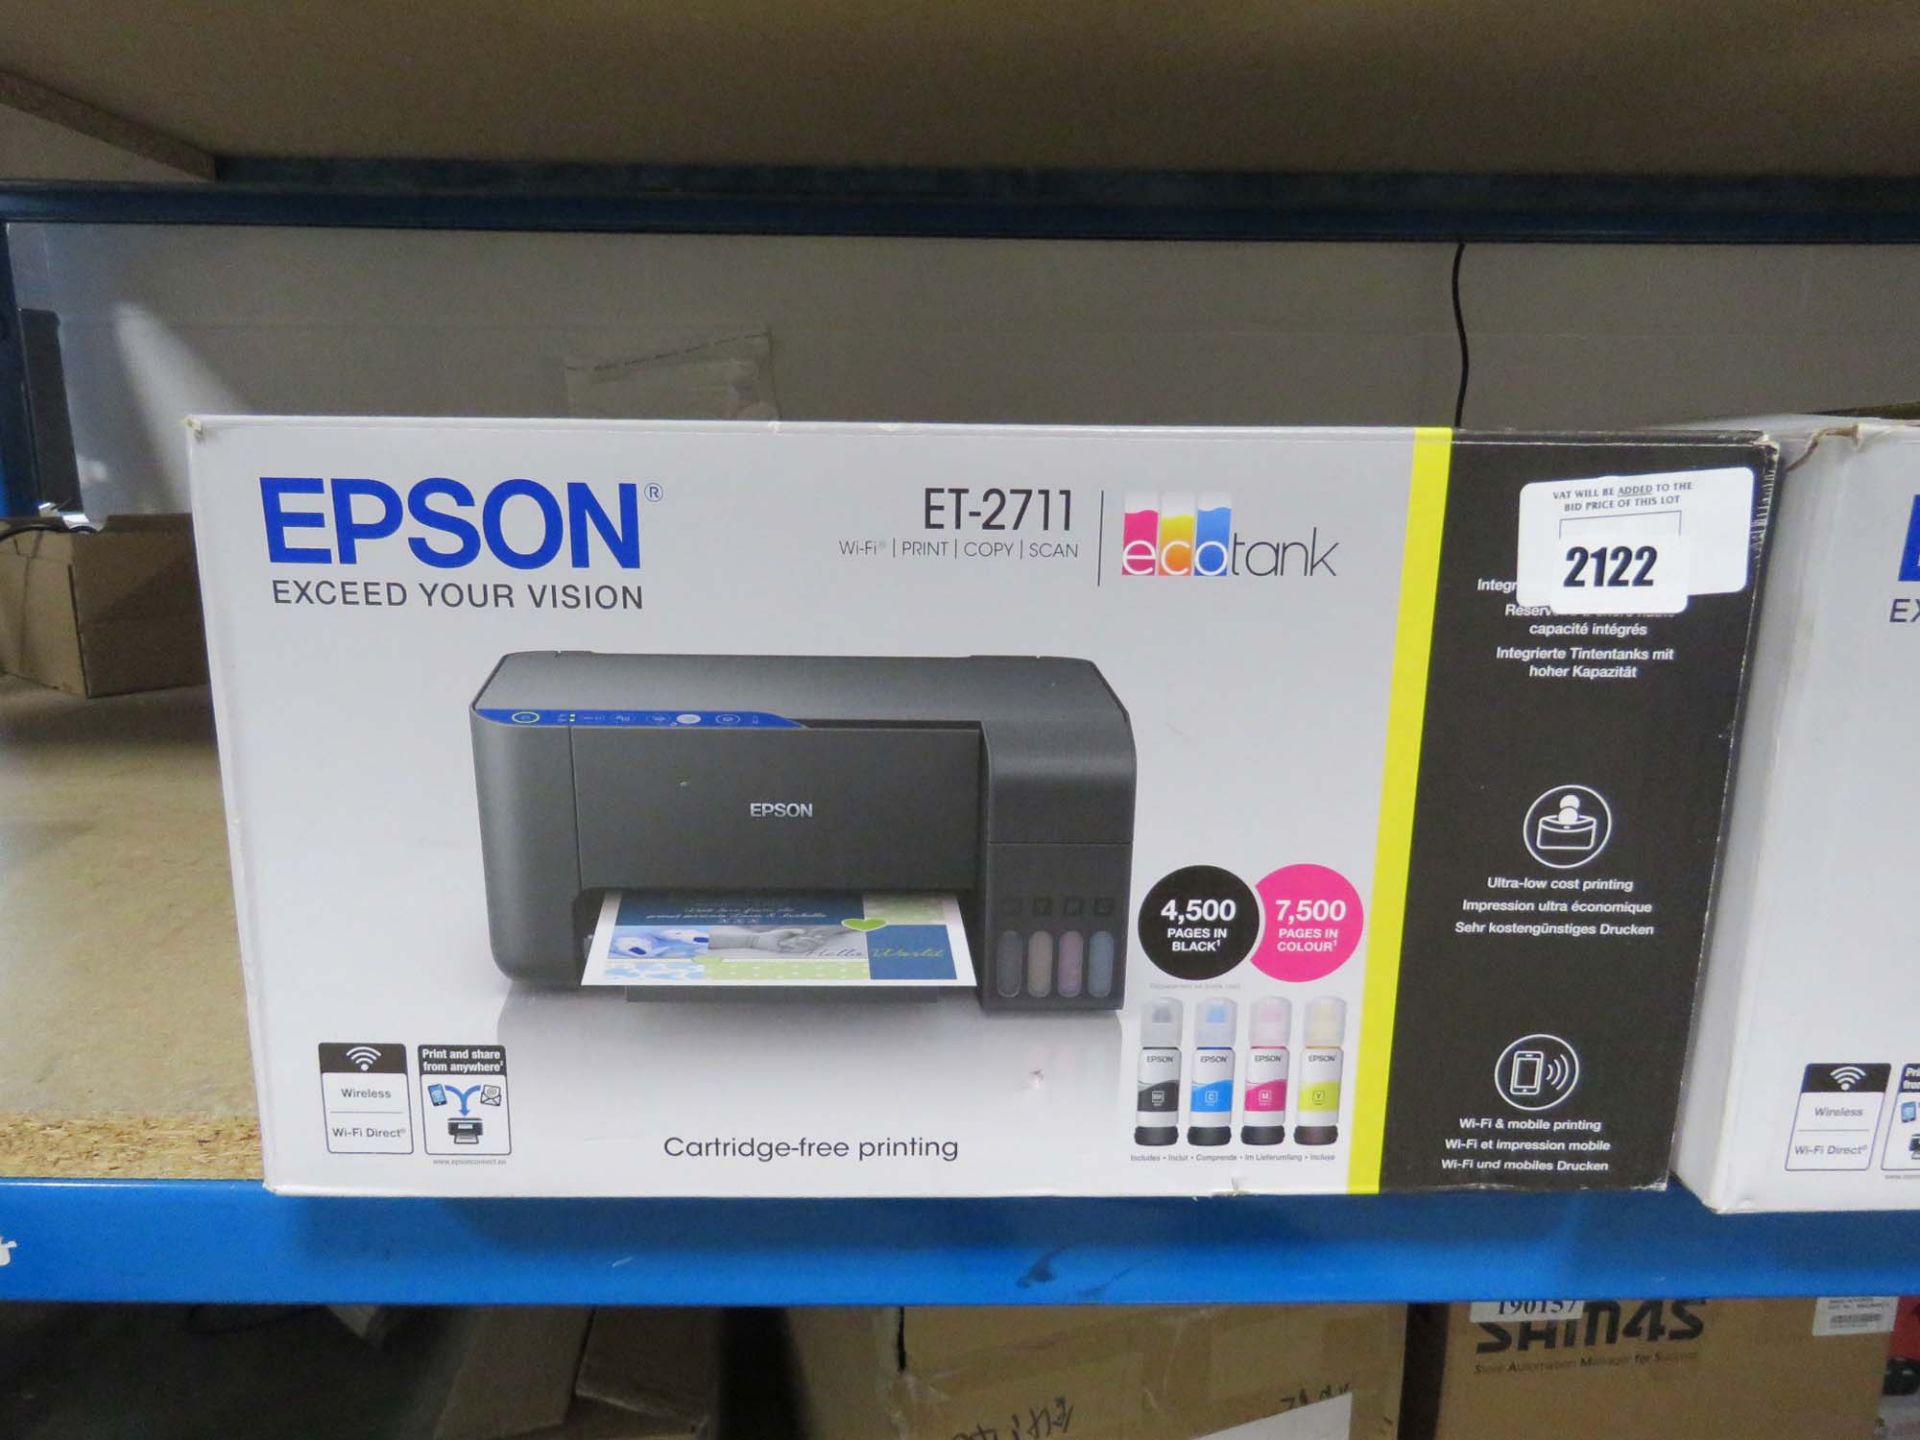 Epson ET2711 Ecotank printer in box